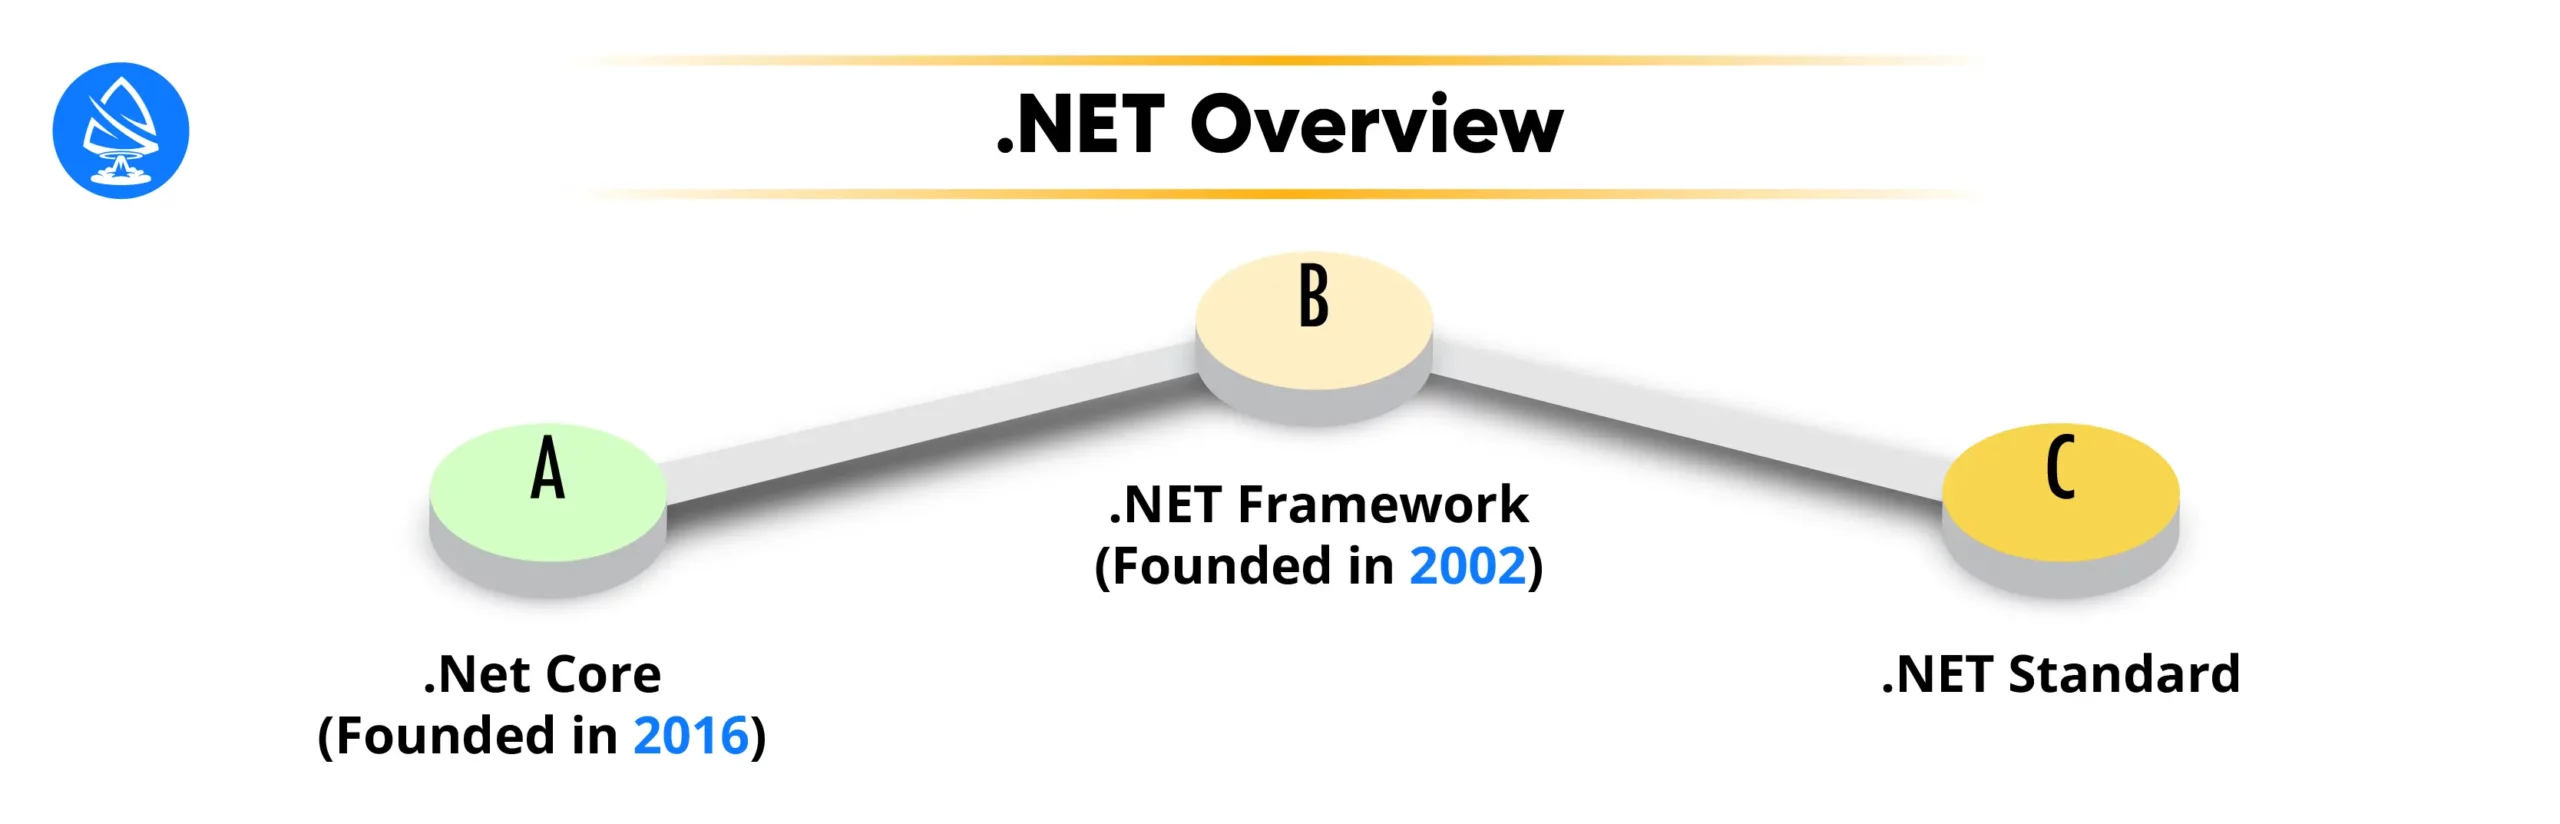 .NET Overview 